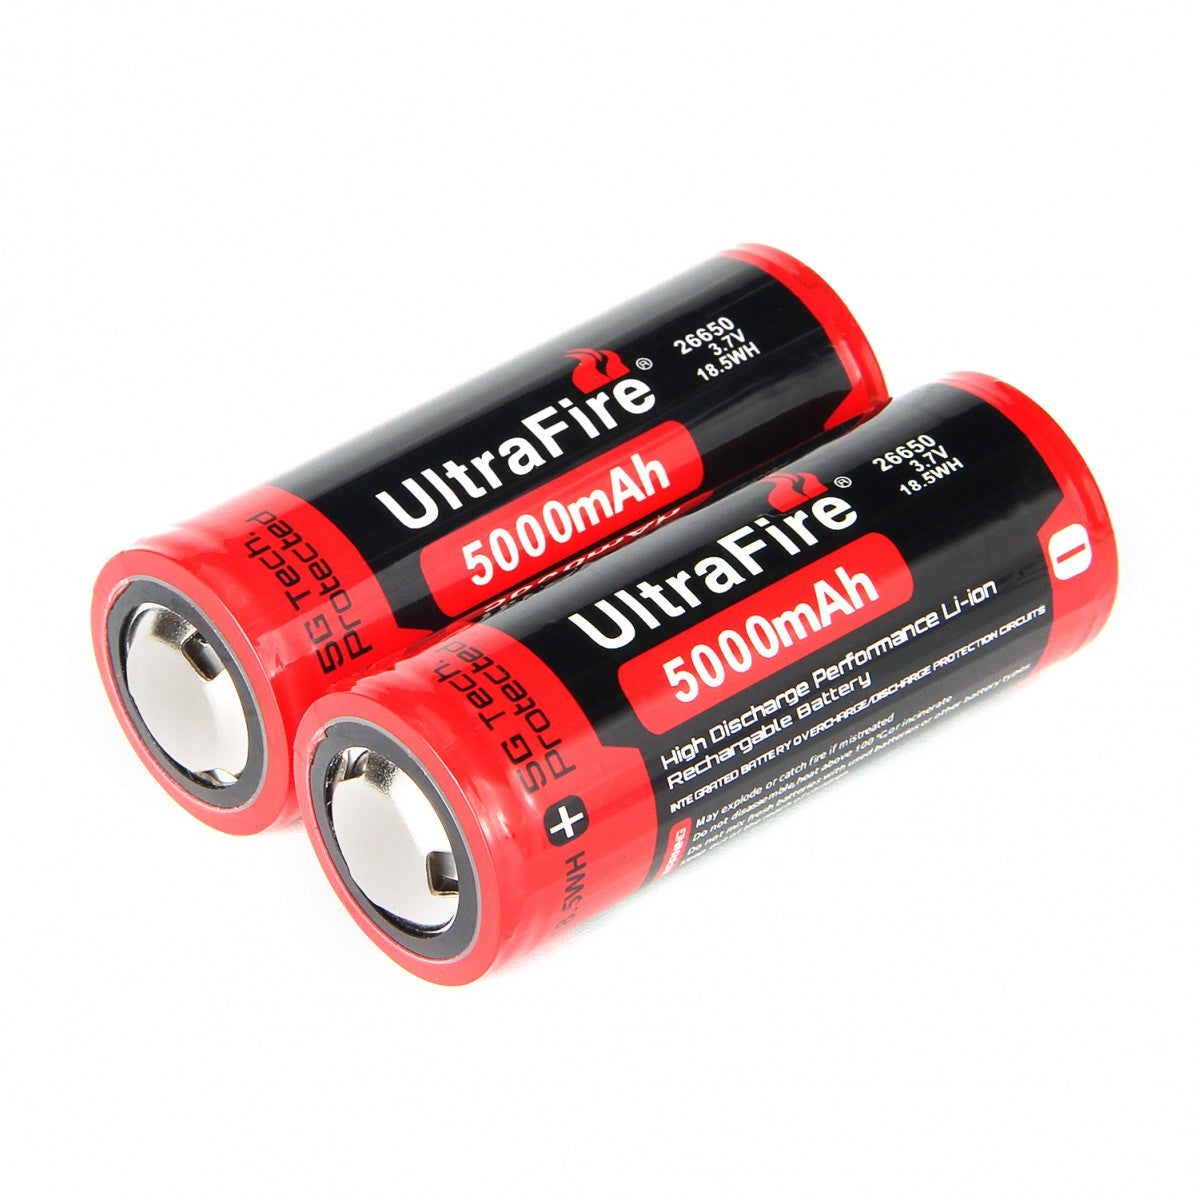 Großhandel kaufen Sie UltraFire 18650 3,7V 3000mAh Protected Lithium-Ionen- Akku - Online-Großhandel